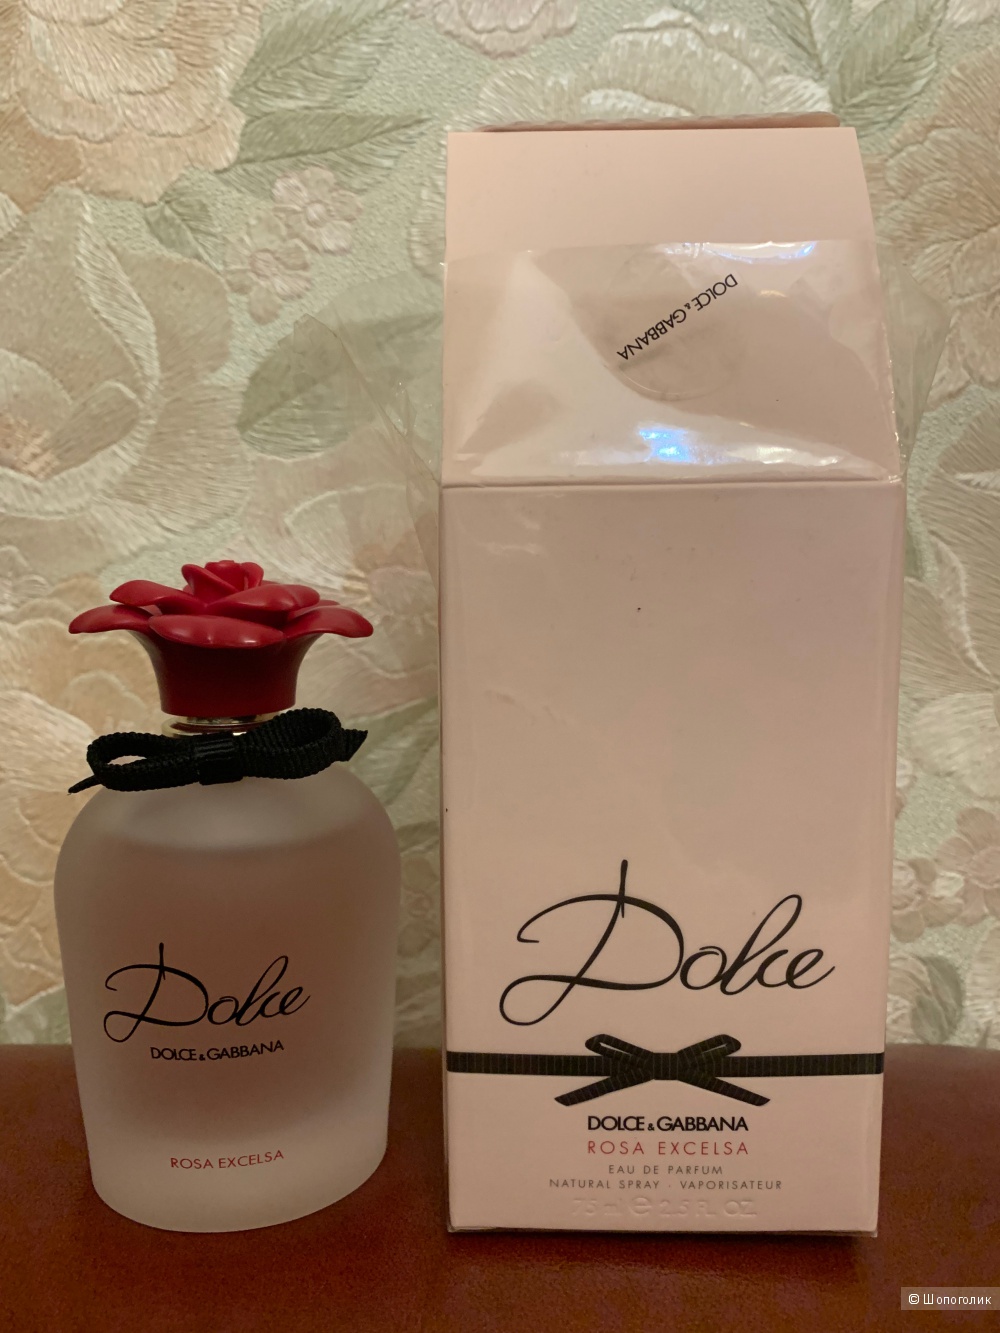 Парфюмерная вода "Dolce&Gabbana Dolce Rosa Excelsa" 75 мл